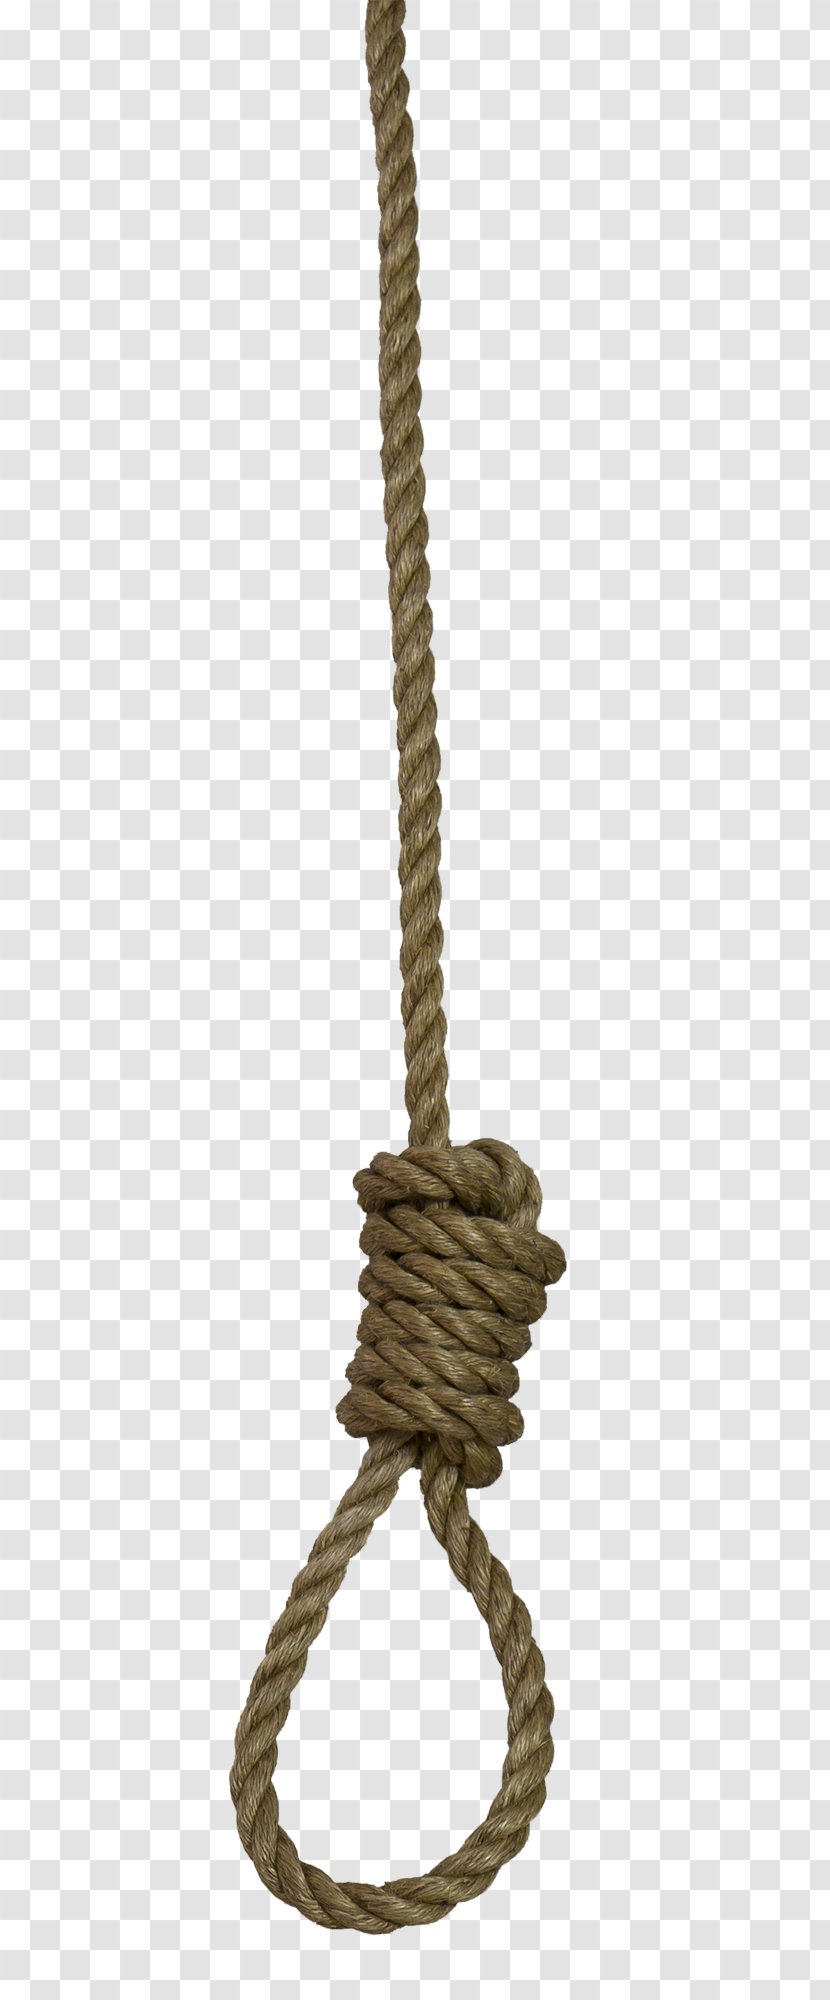 Noose Rope Knot - Hangmans - A Transparent PNG